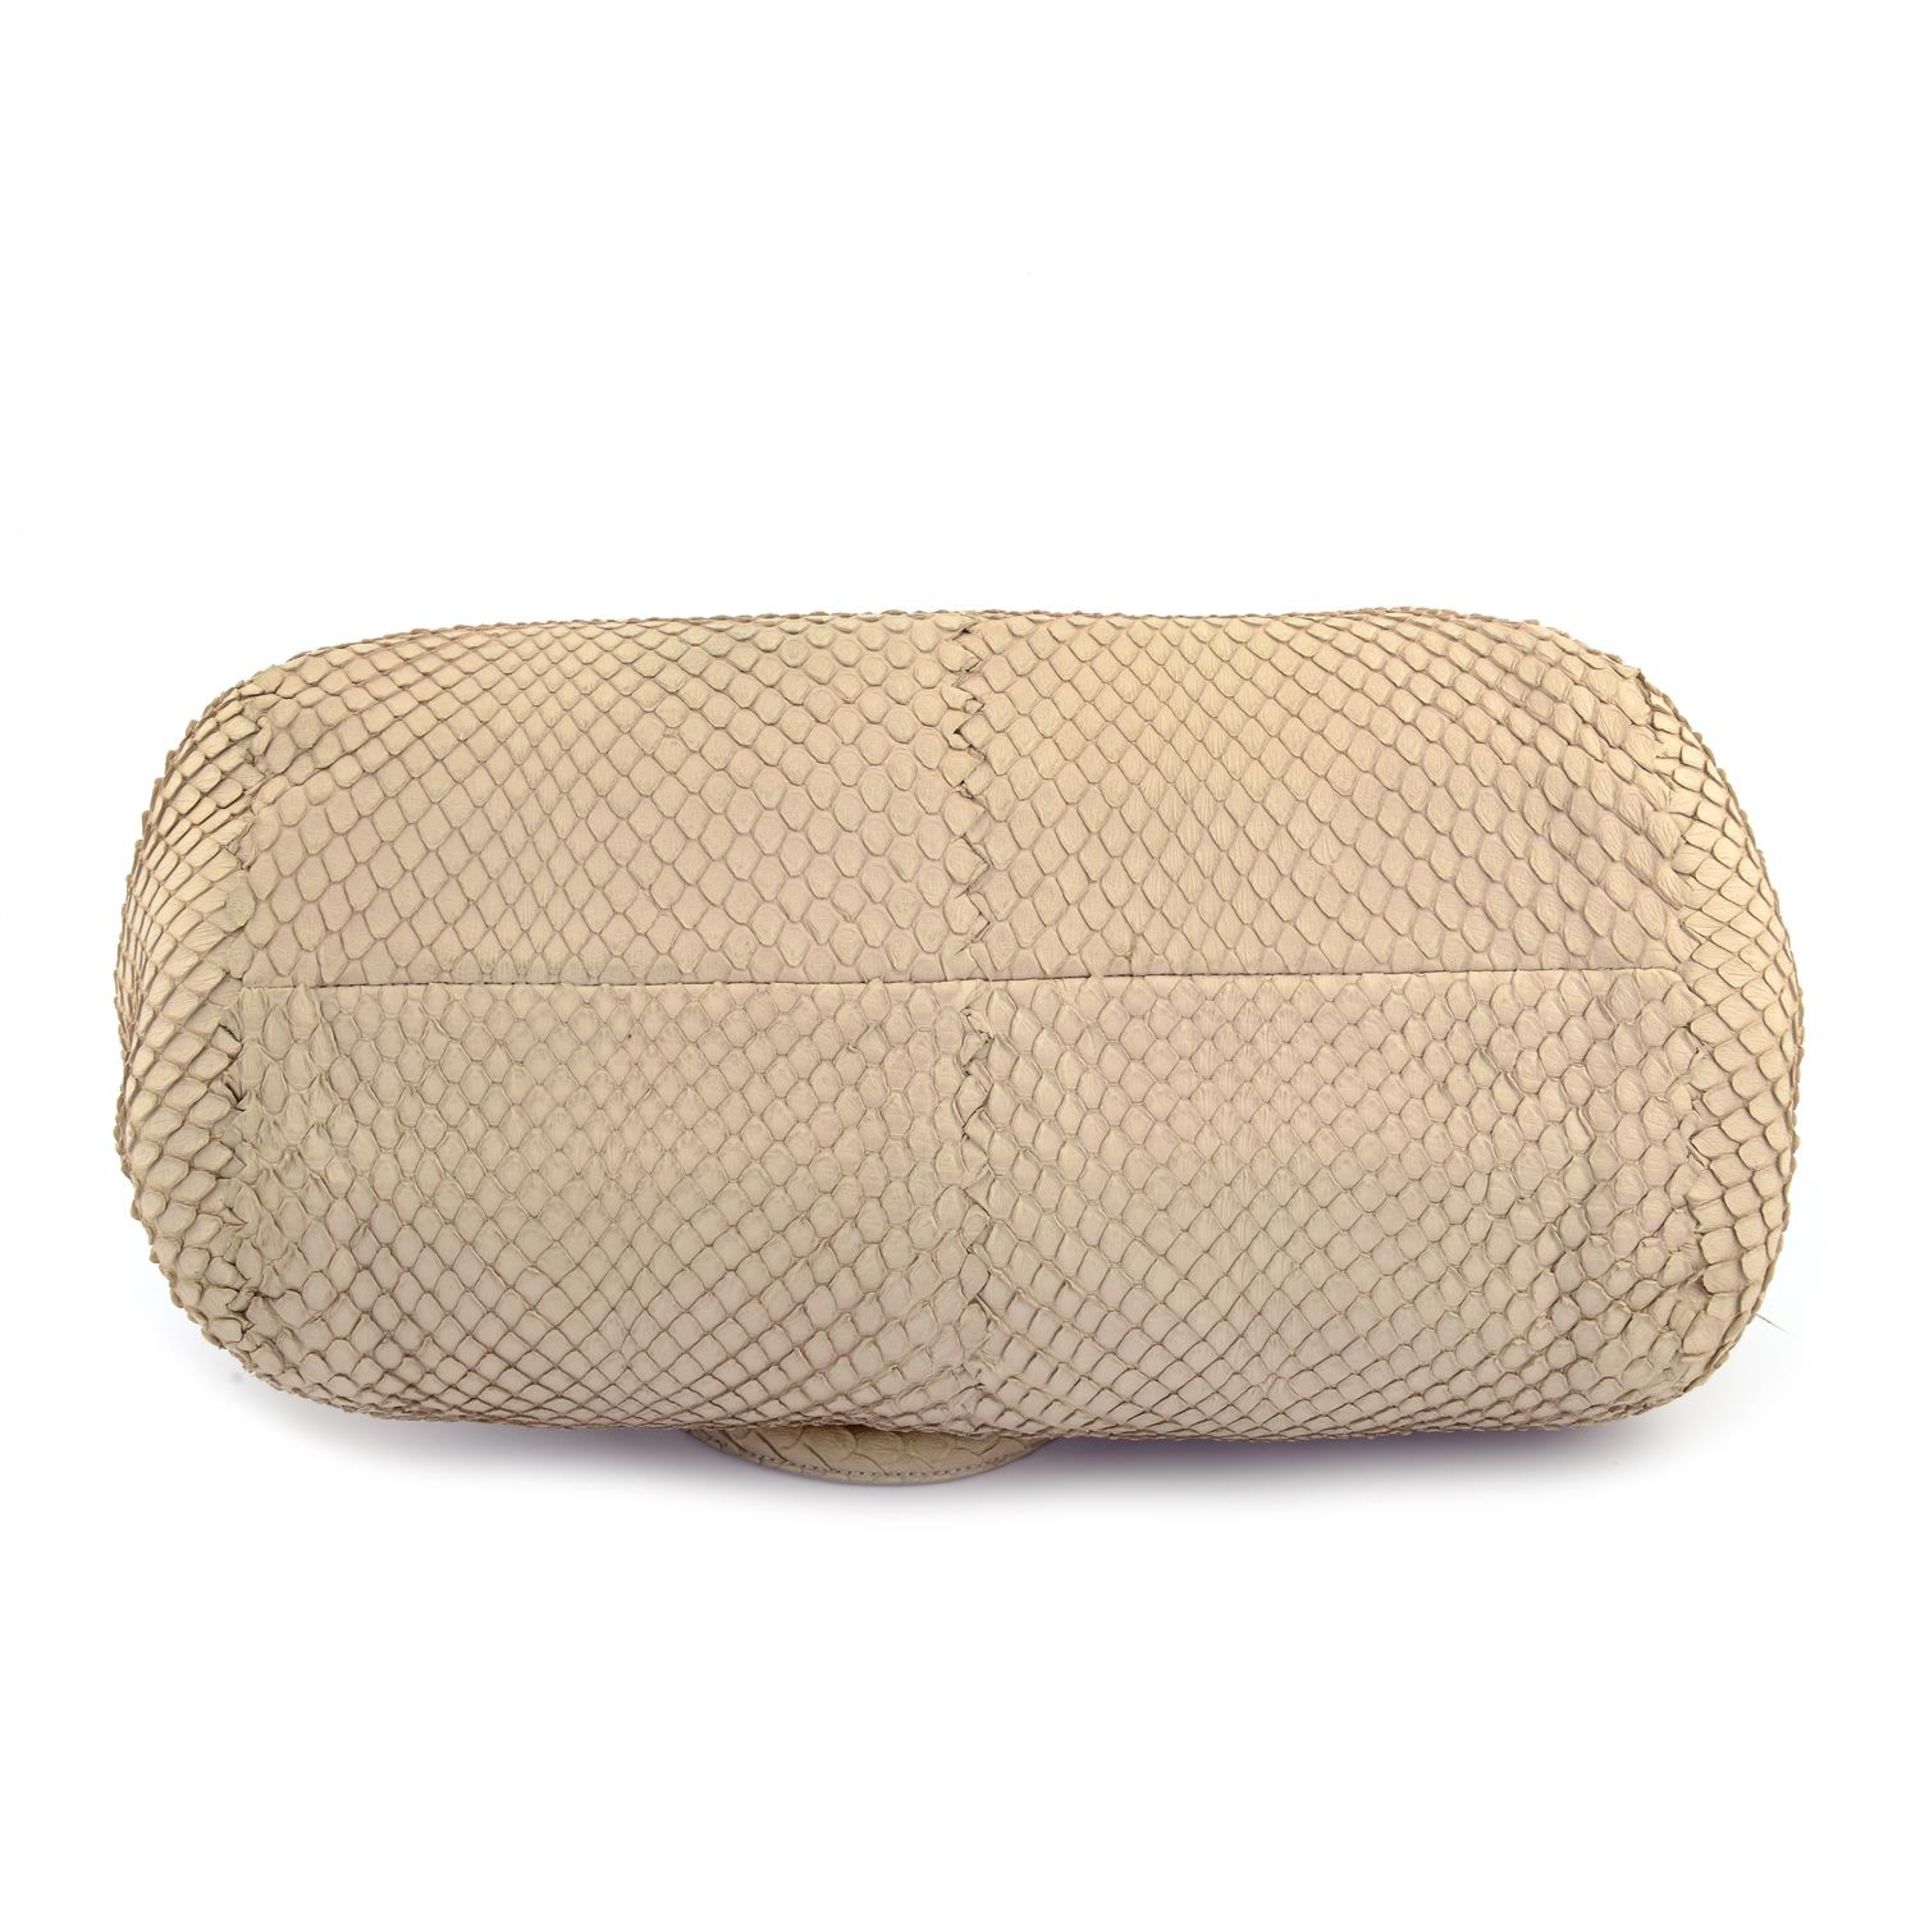 BOTTEGA VENETA - a beige Python leather handbag. - Bild 4 aus 6